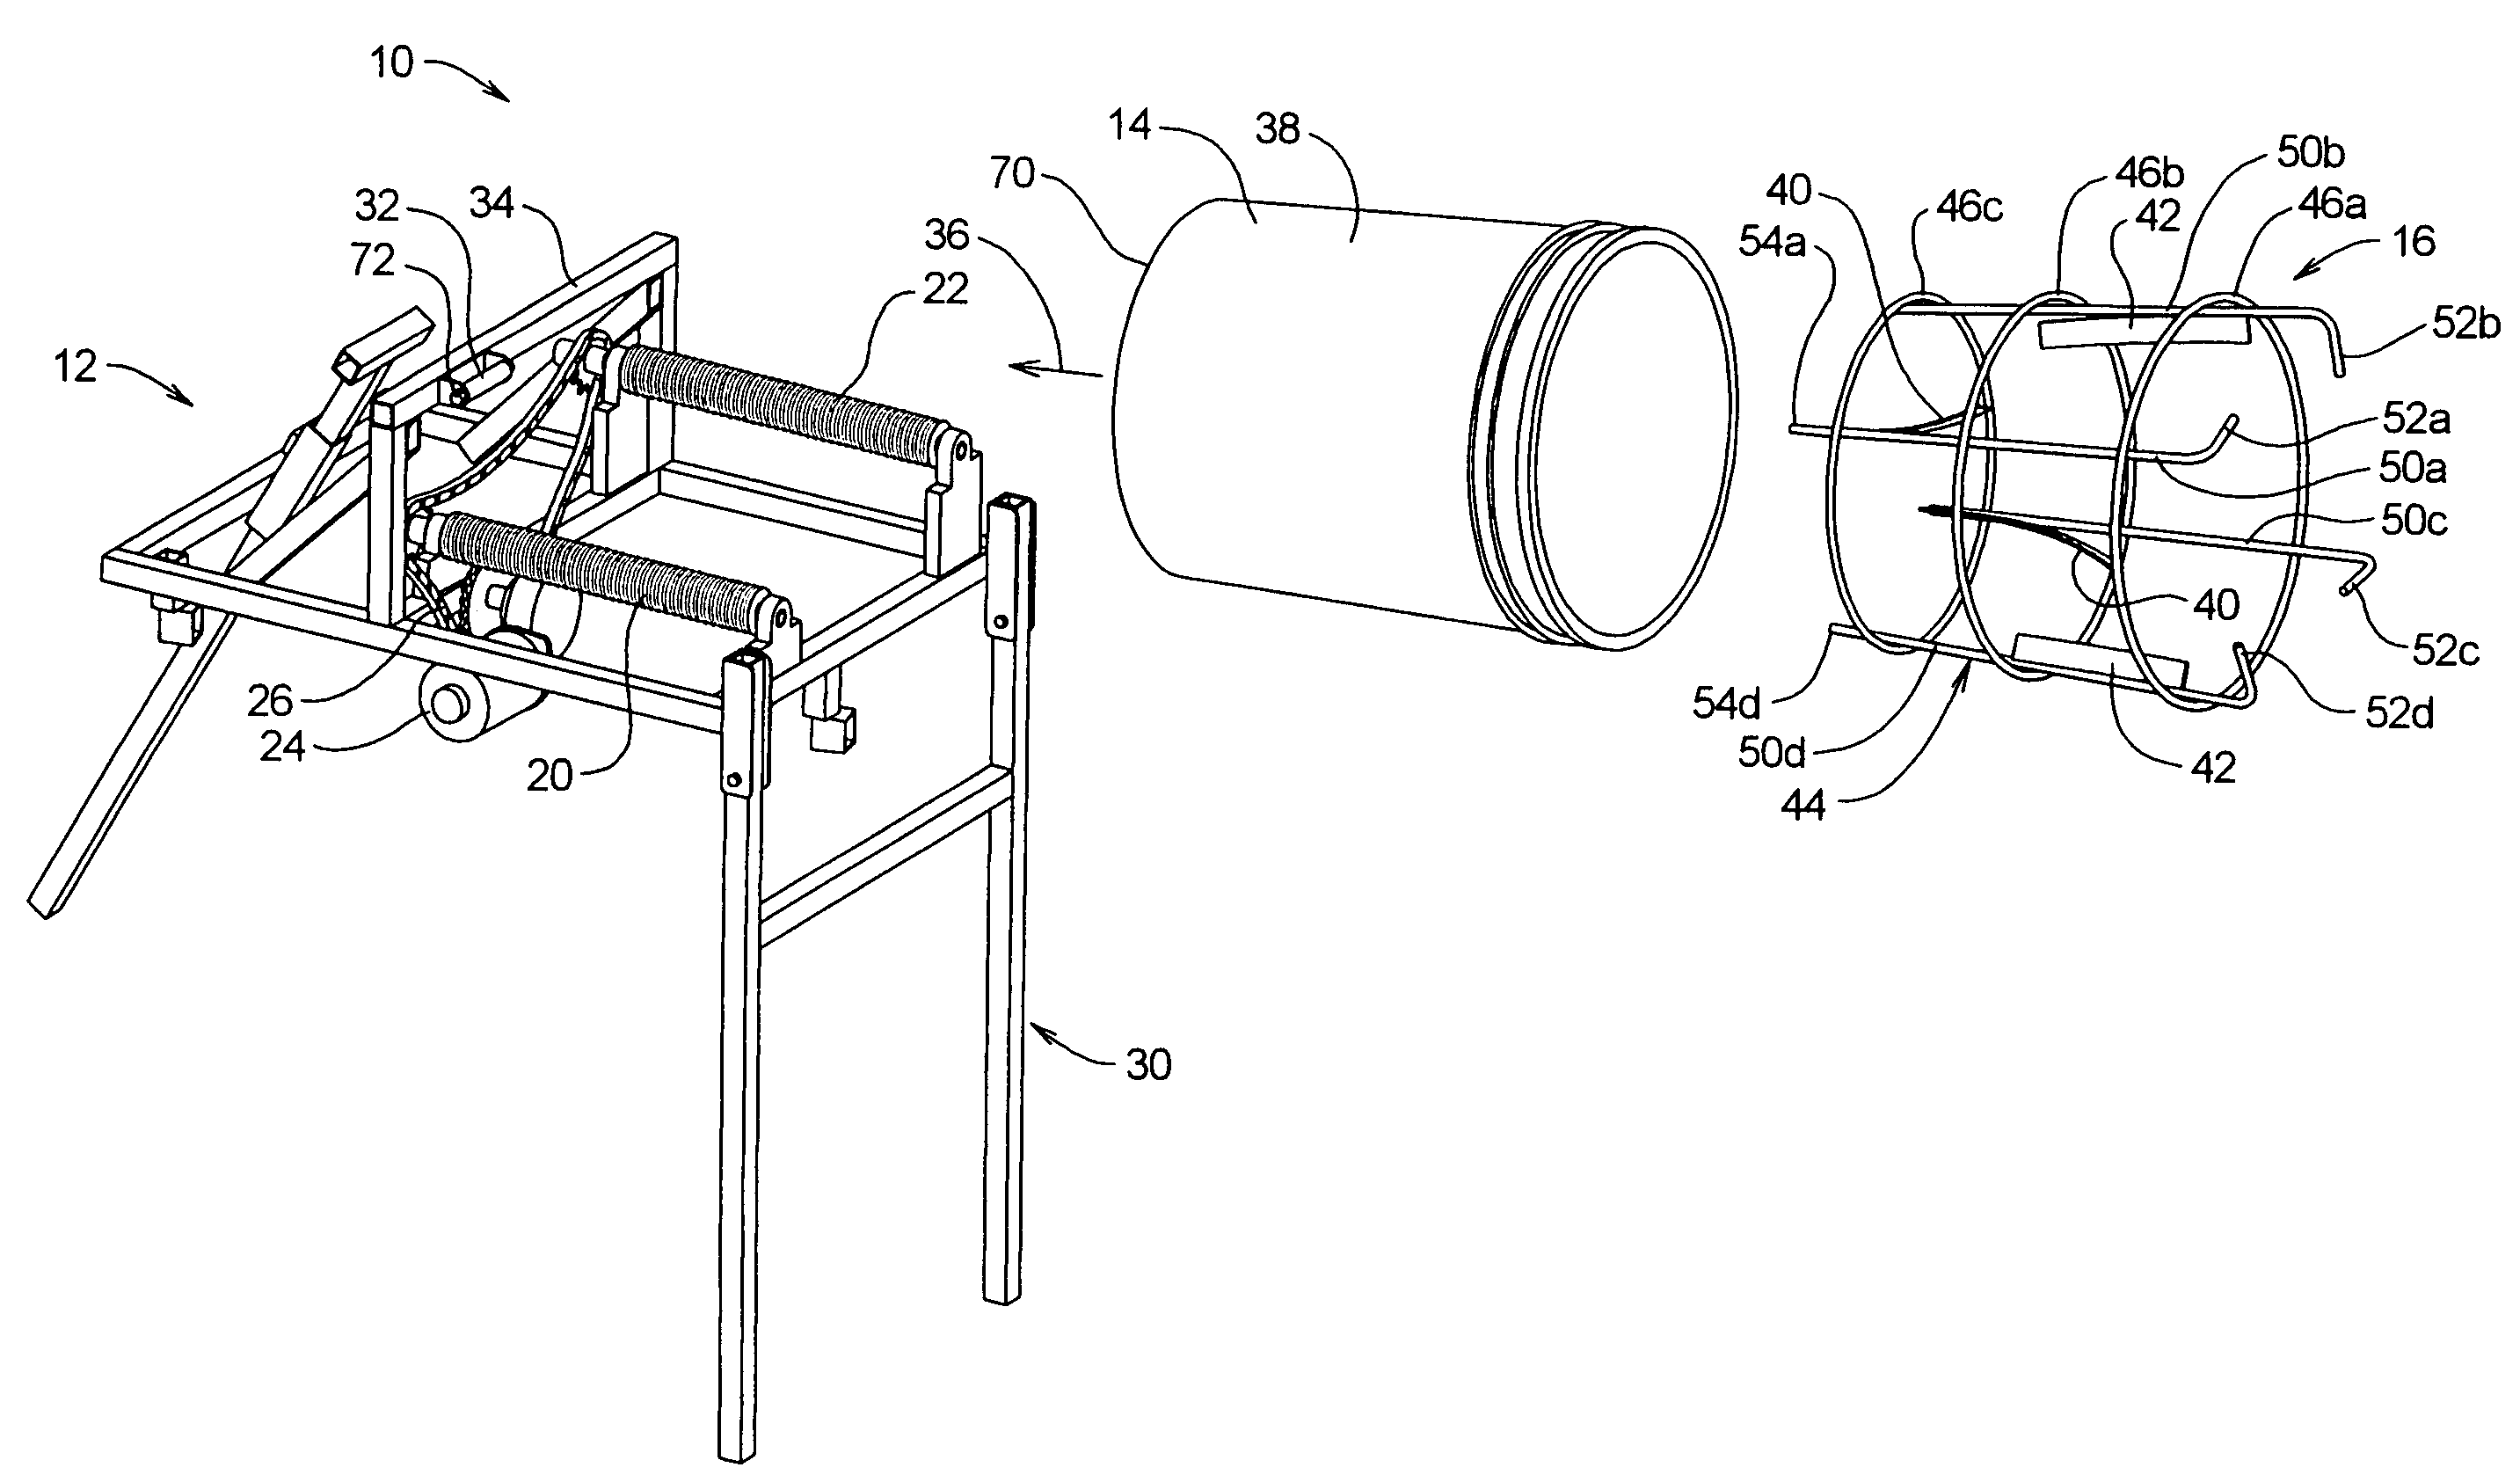 Portable mixing apparatus